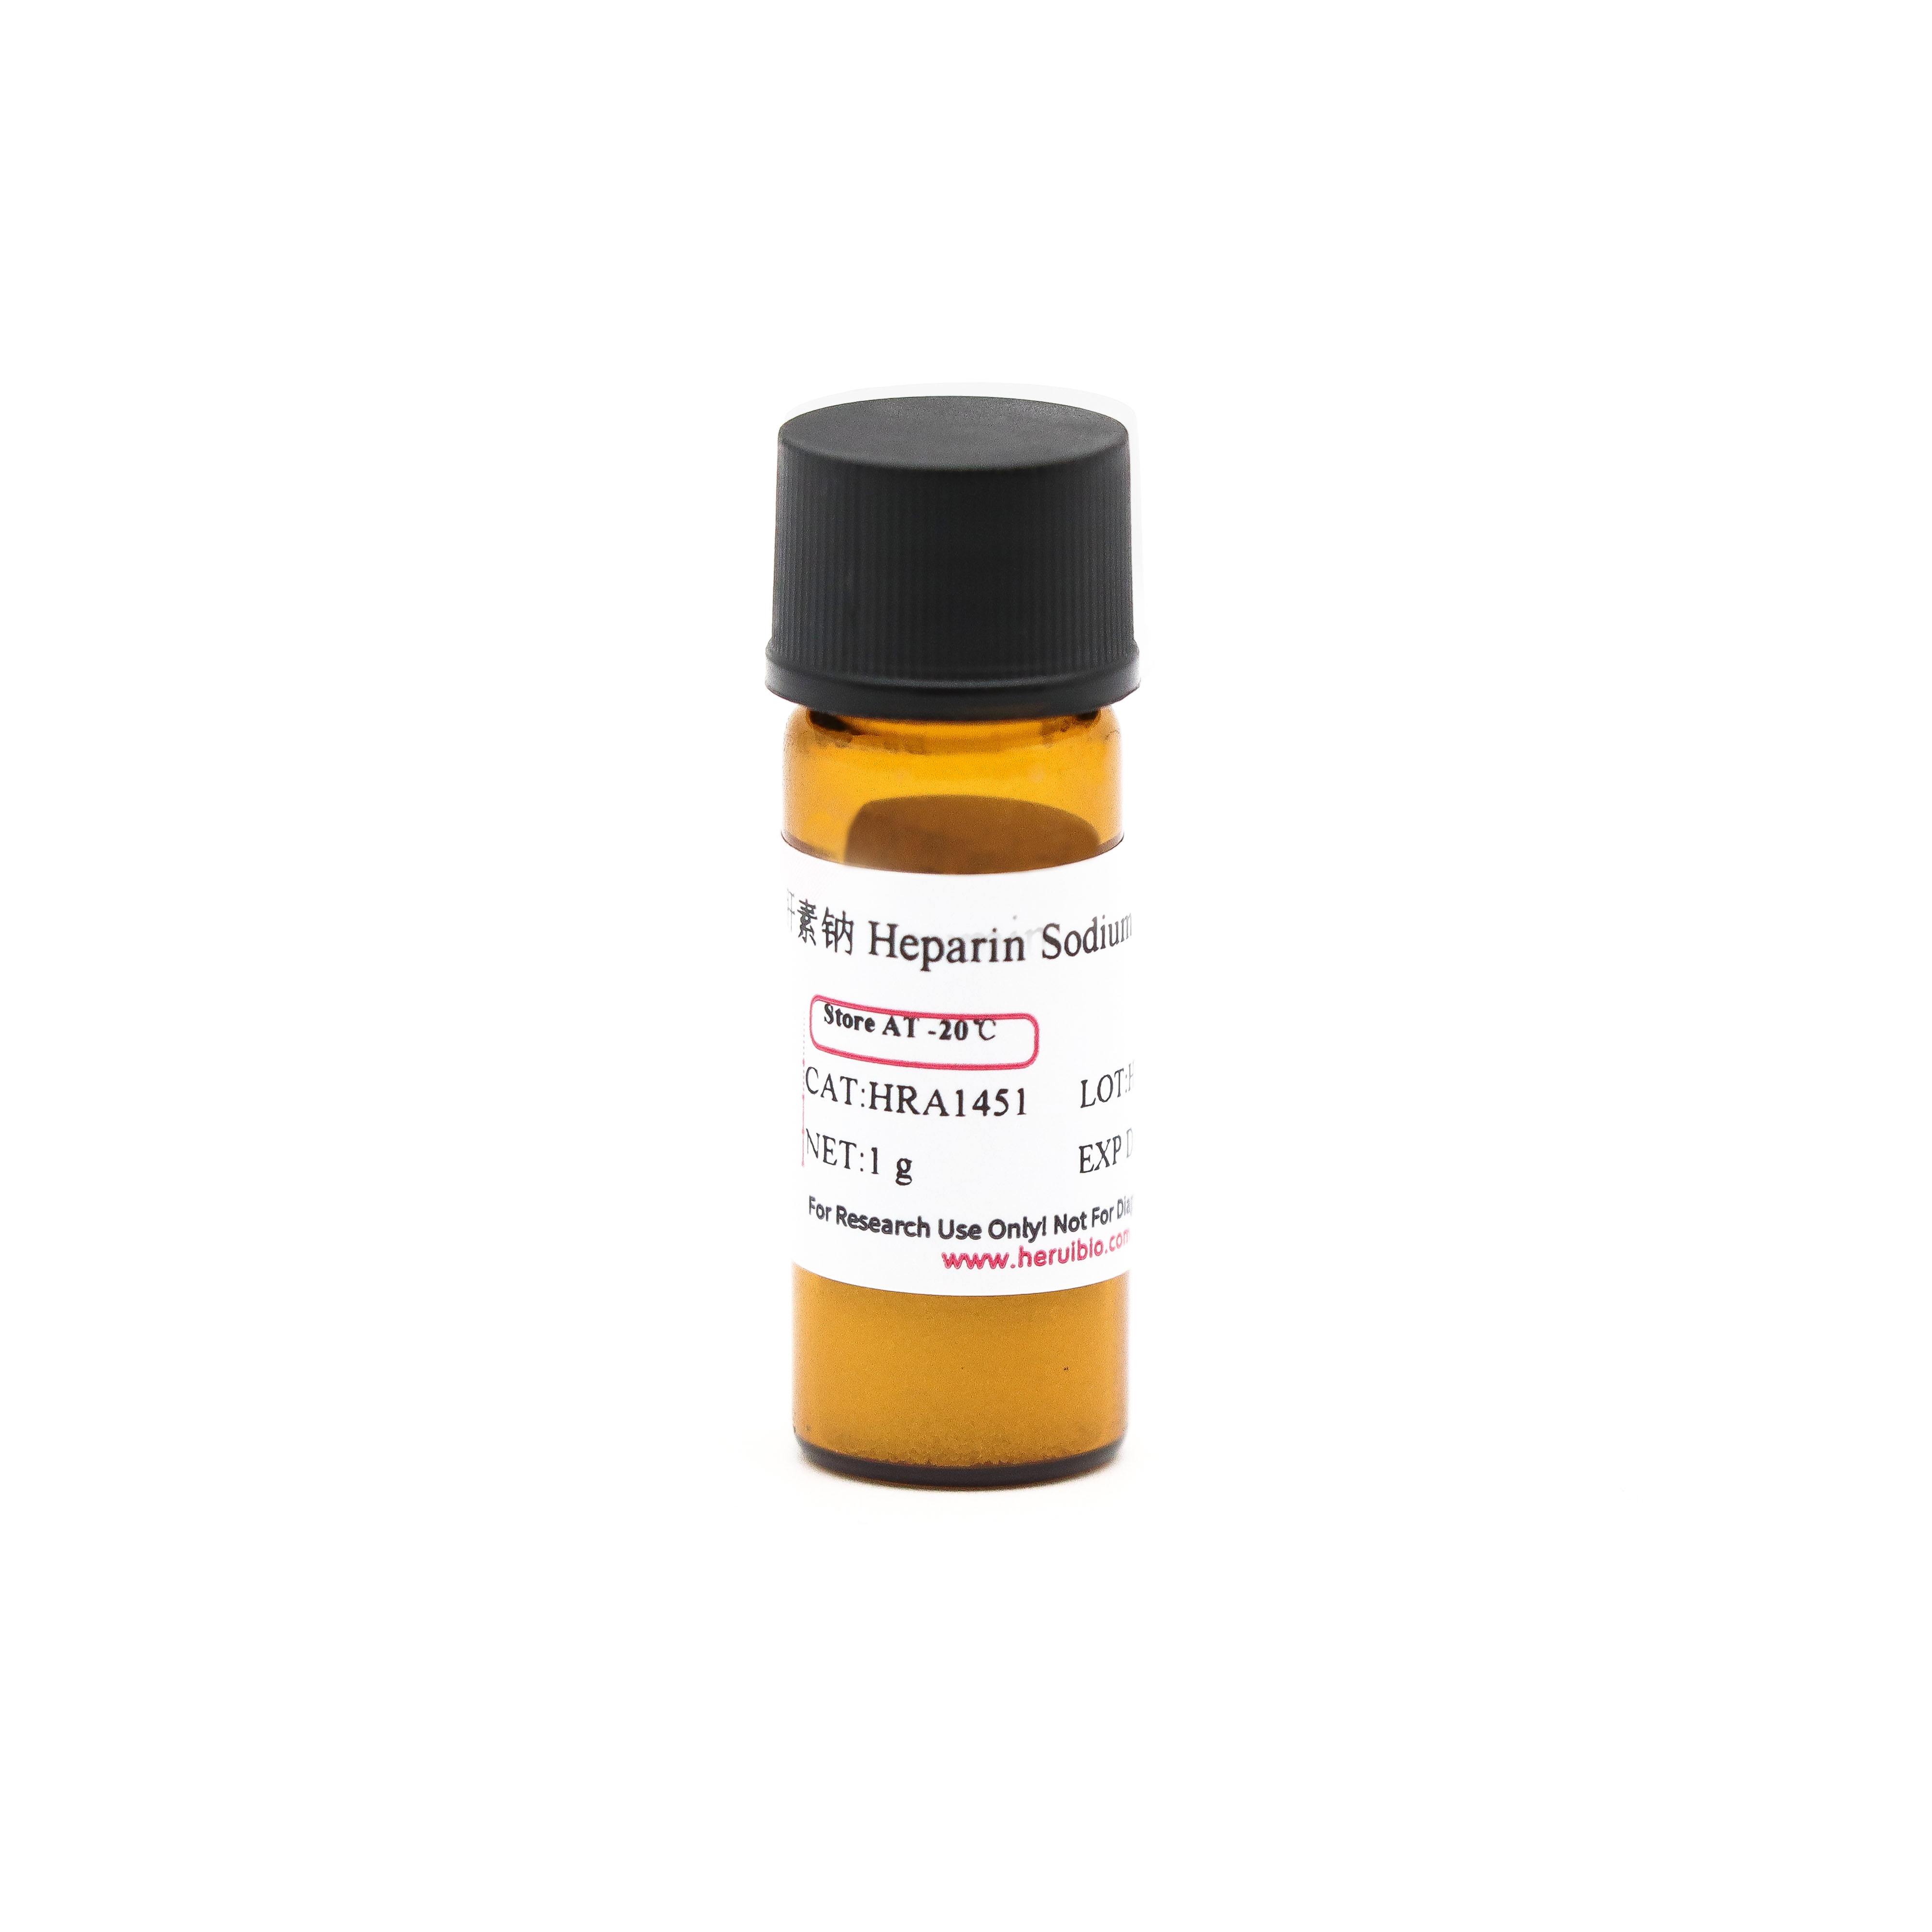 肝素钠 Heparin Sodium